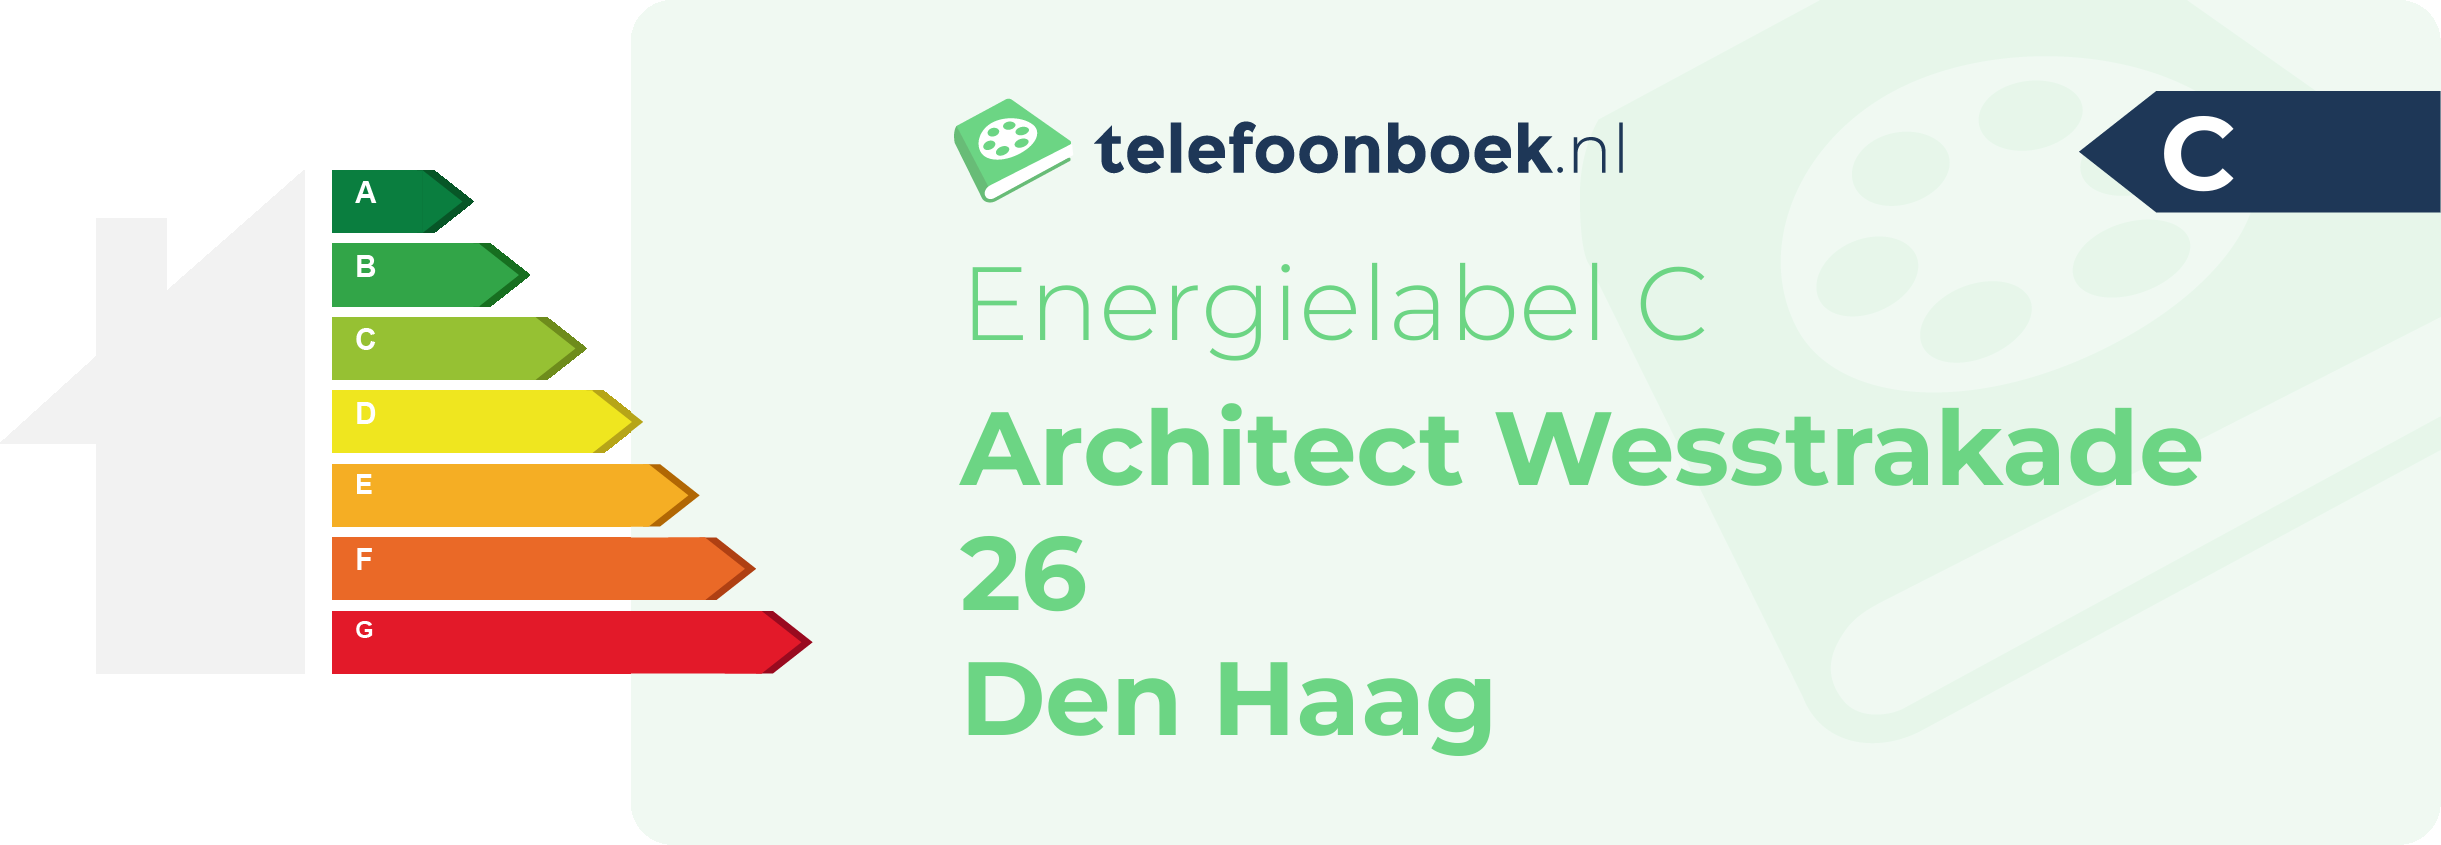 Energielabel Architect Wesstrakade 26 Den Haag